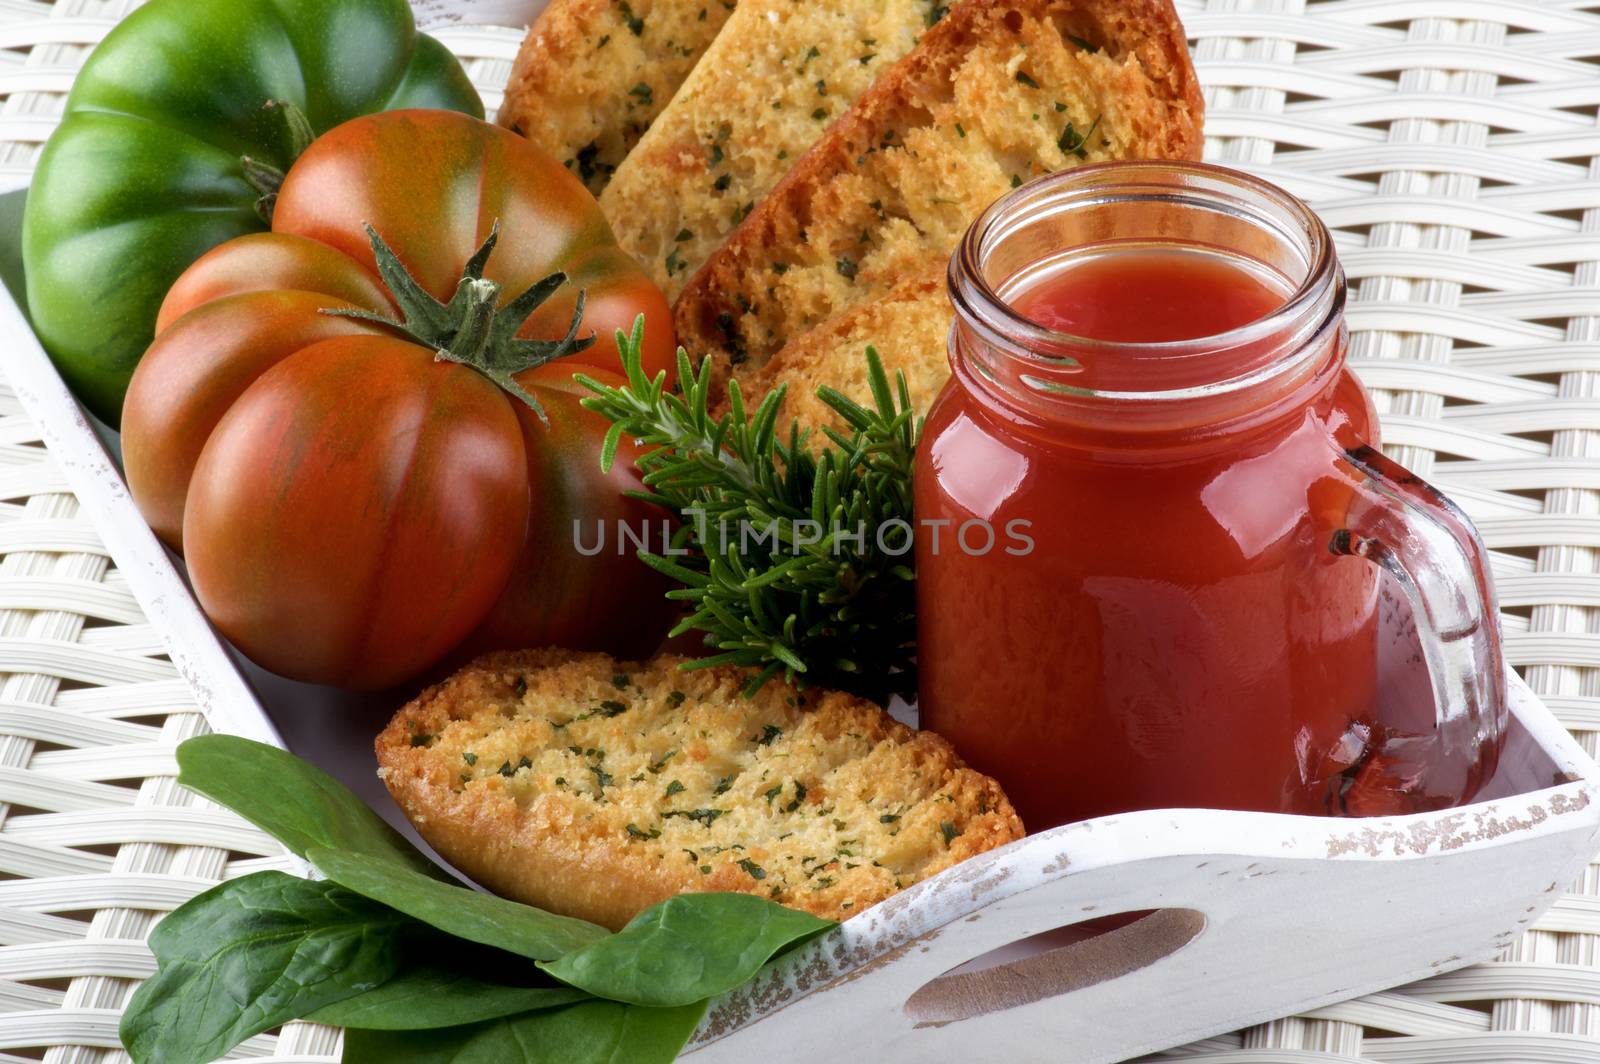 Tomato Juice and Bread by zhekos